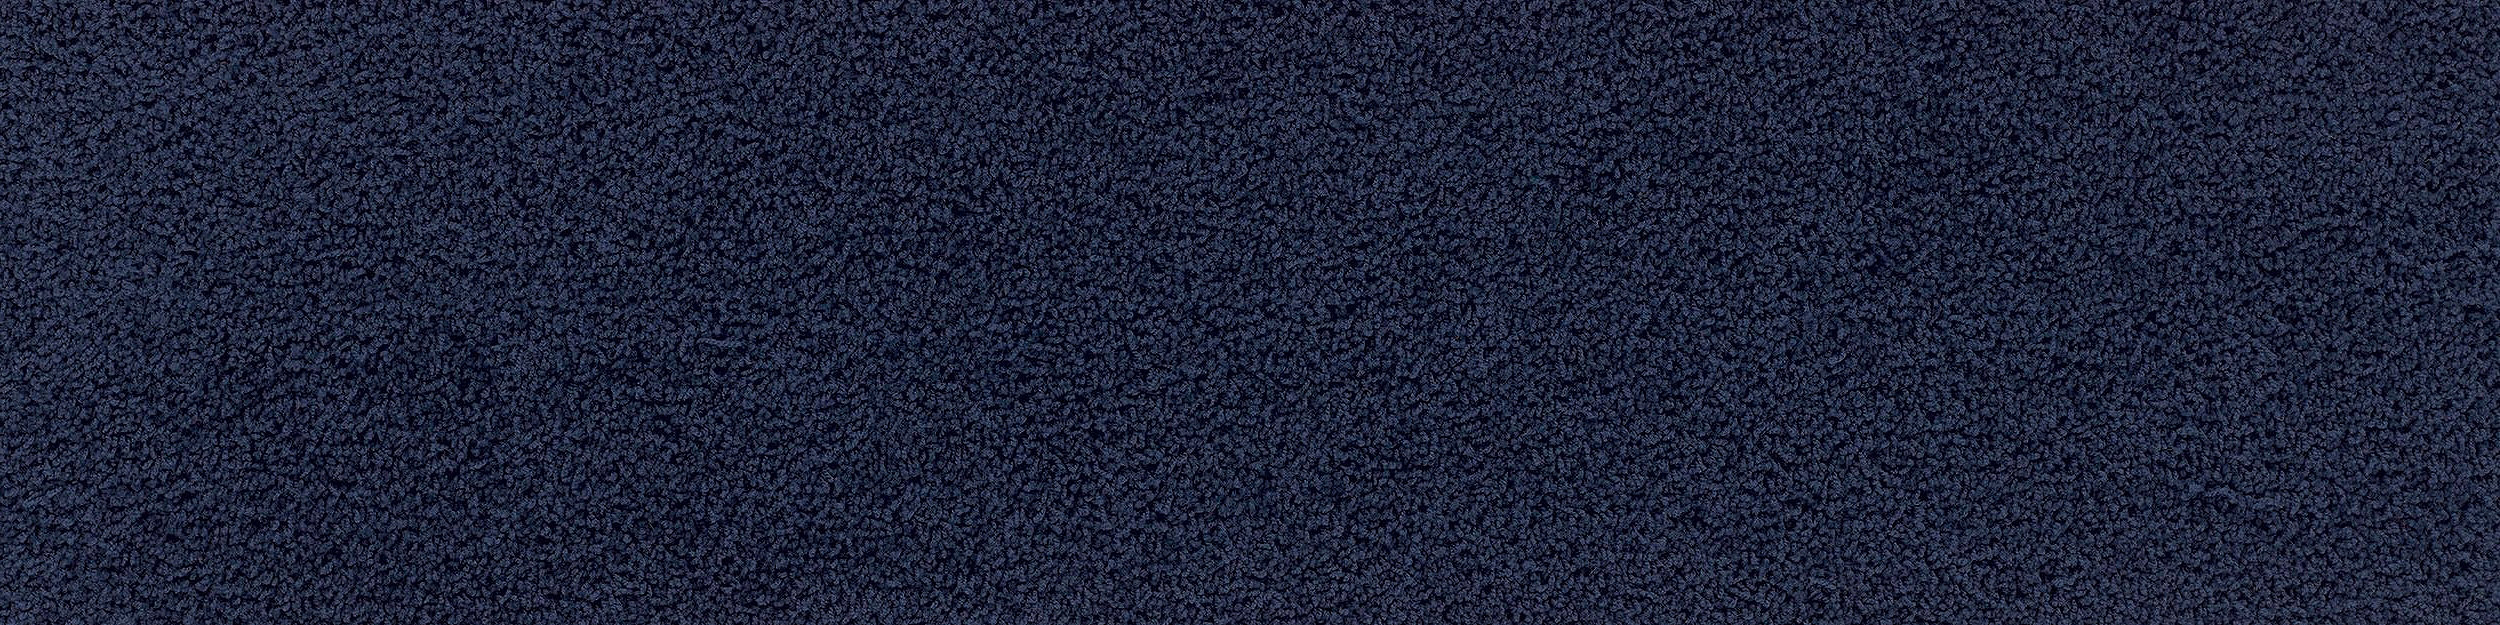 HN830 Carpet Tile In Cobalt afbeeldingnummer 10